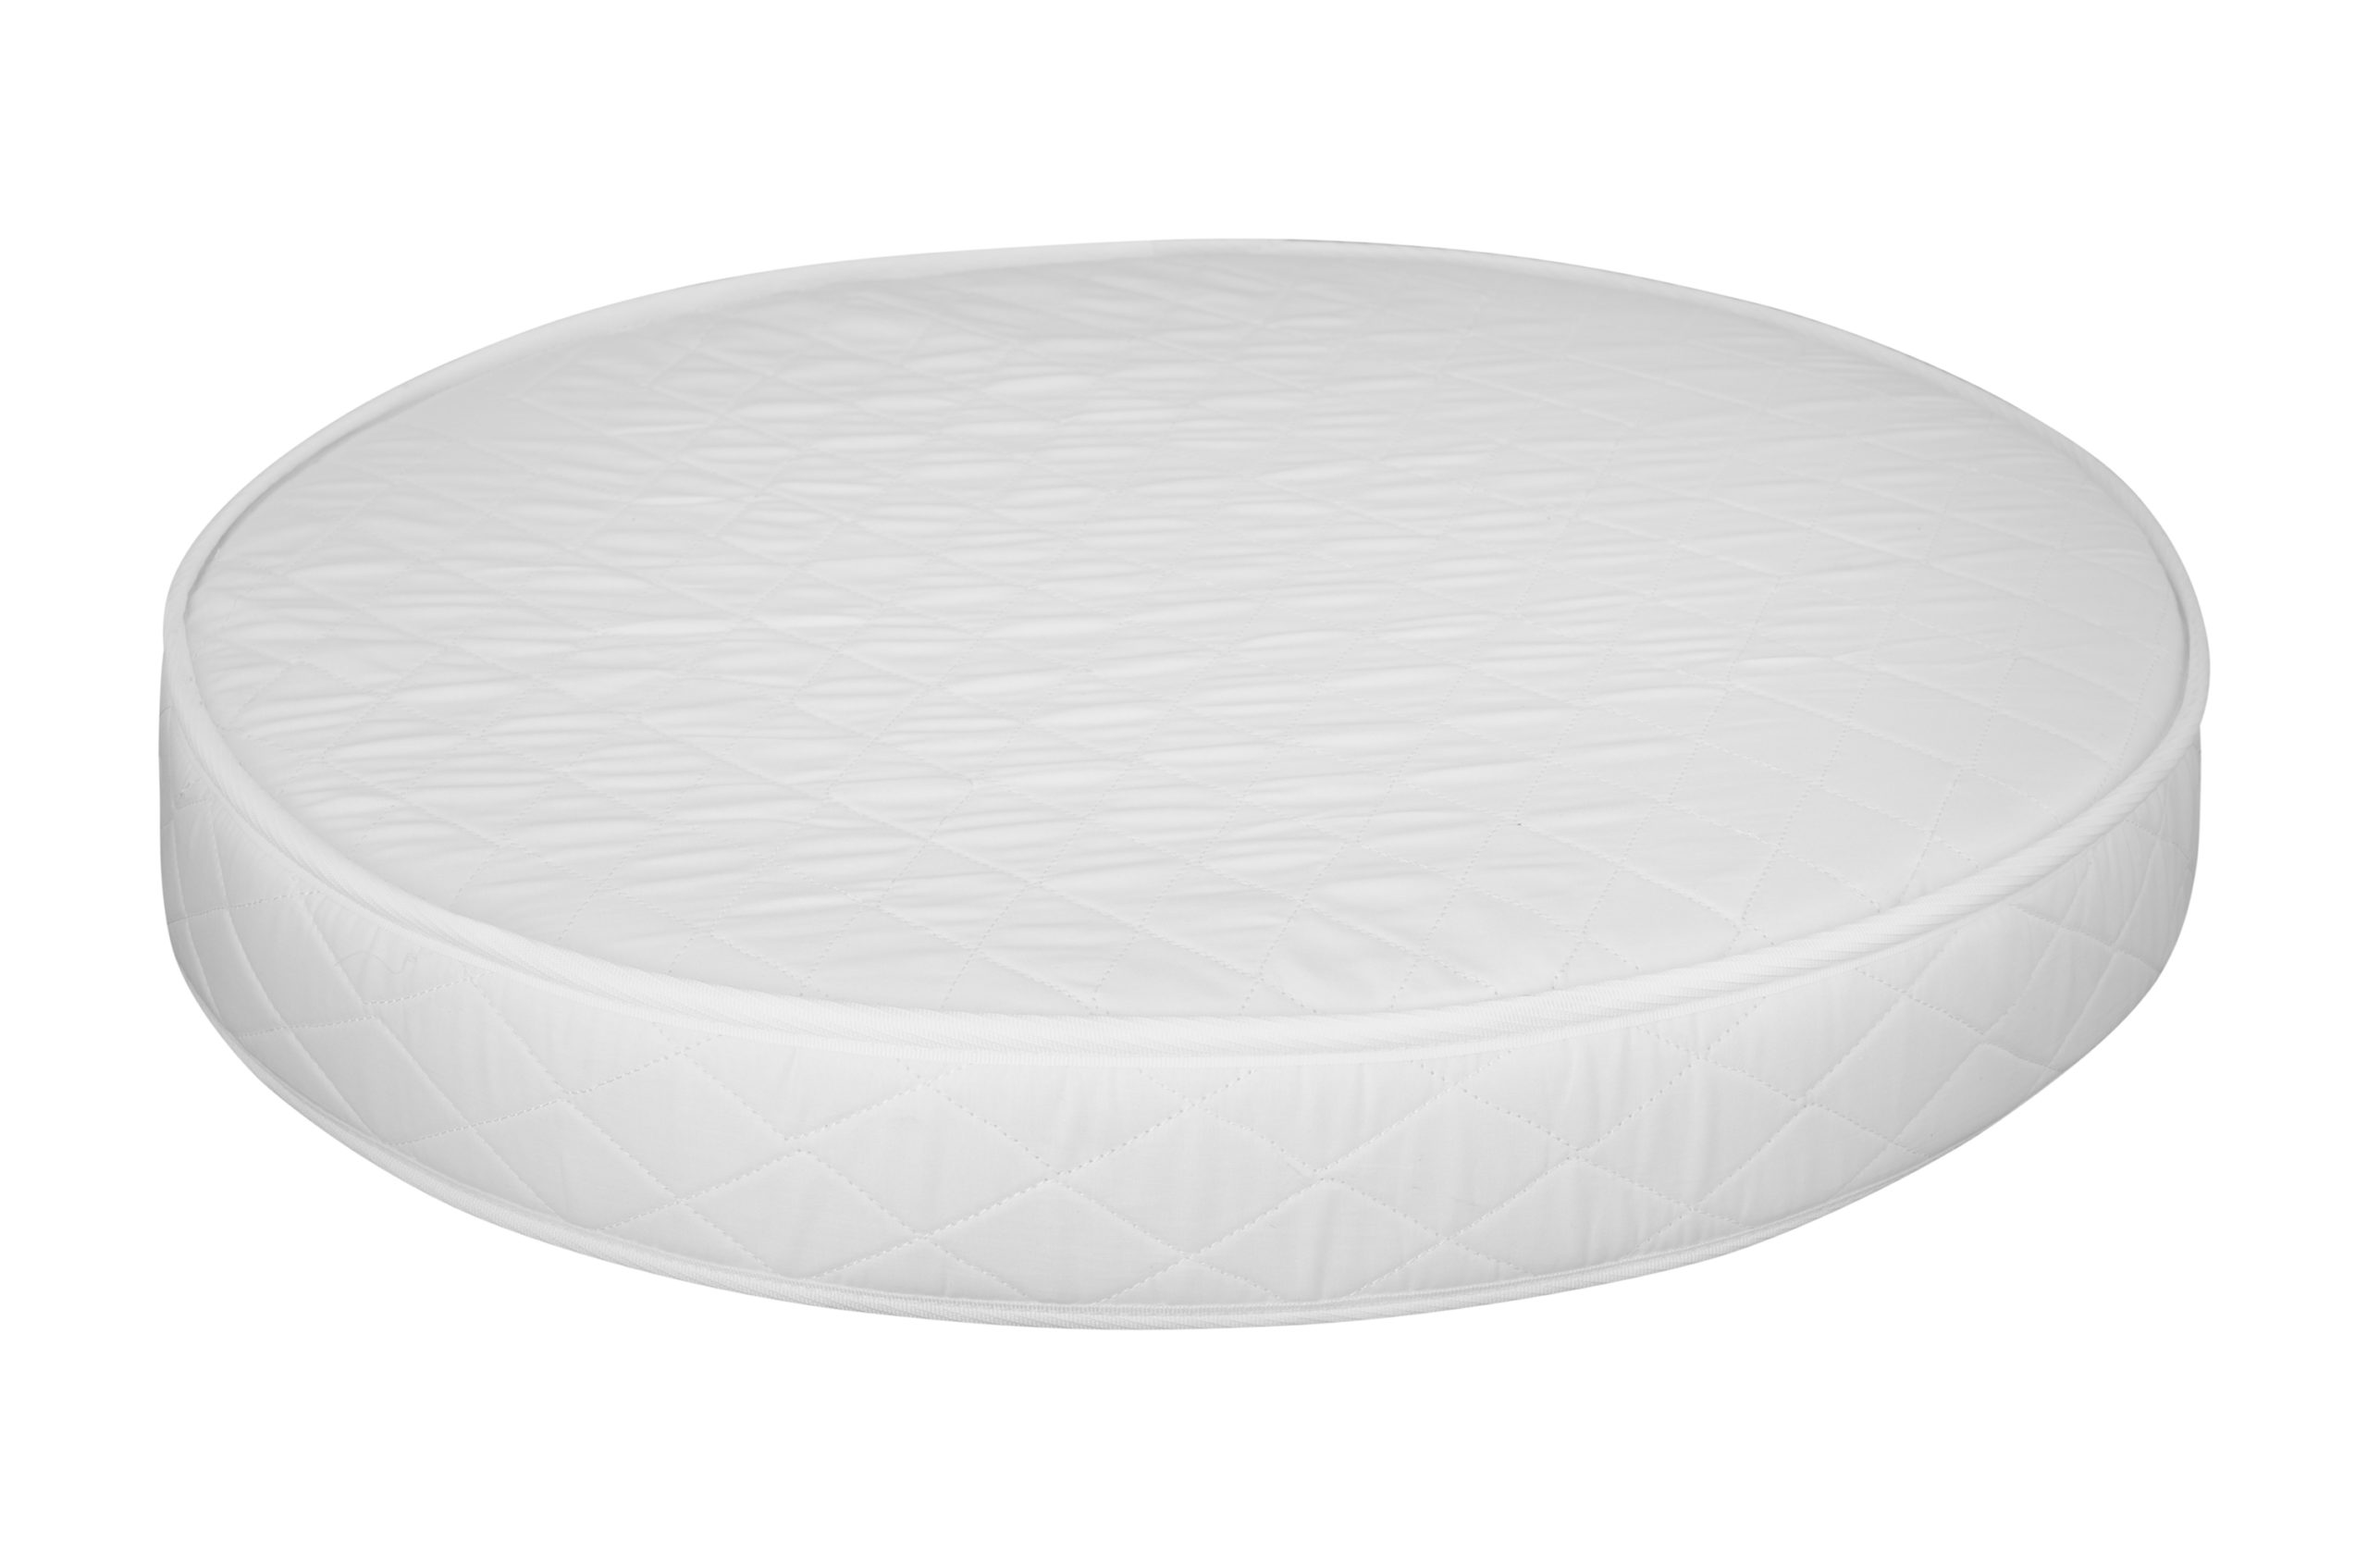 cocoon bassinet mattress size